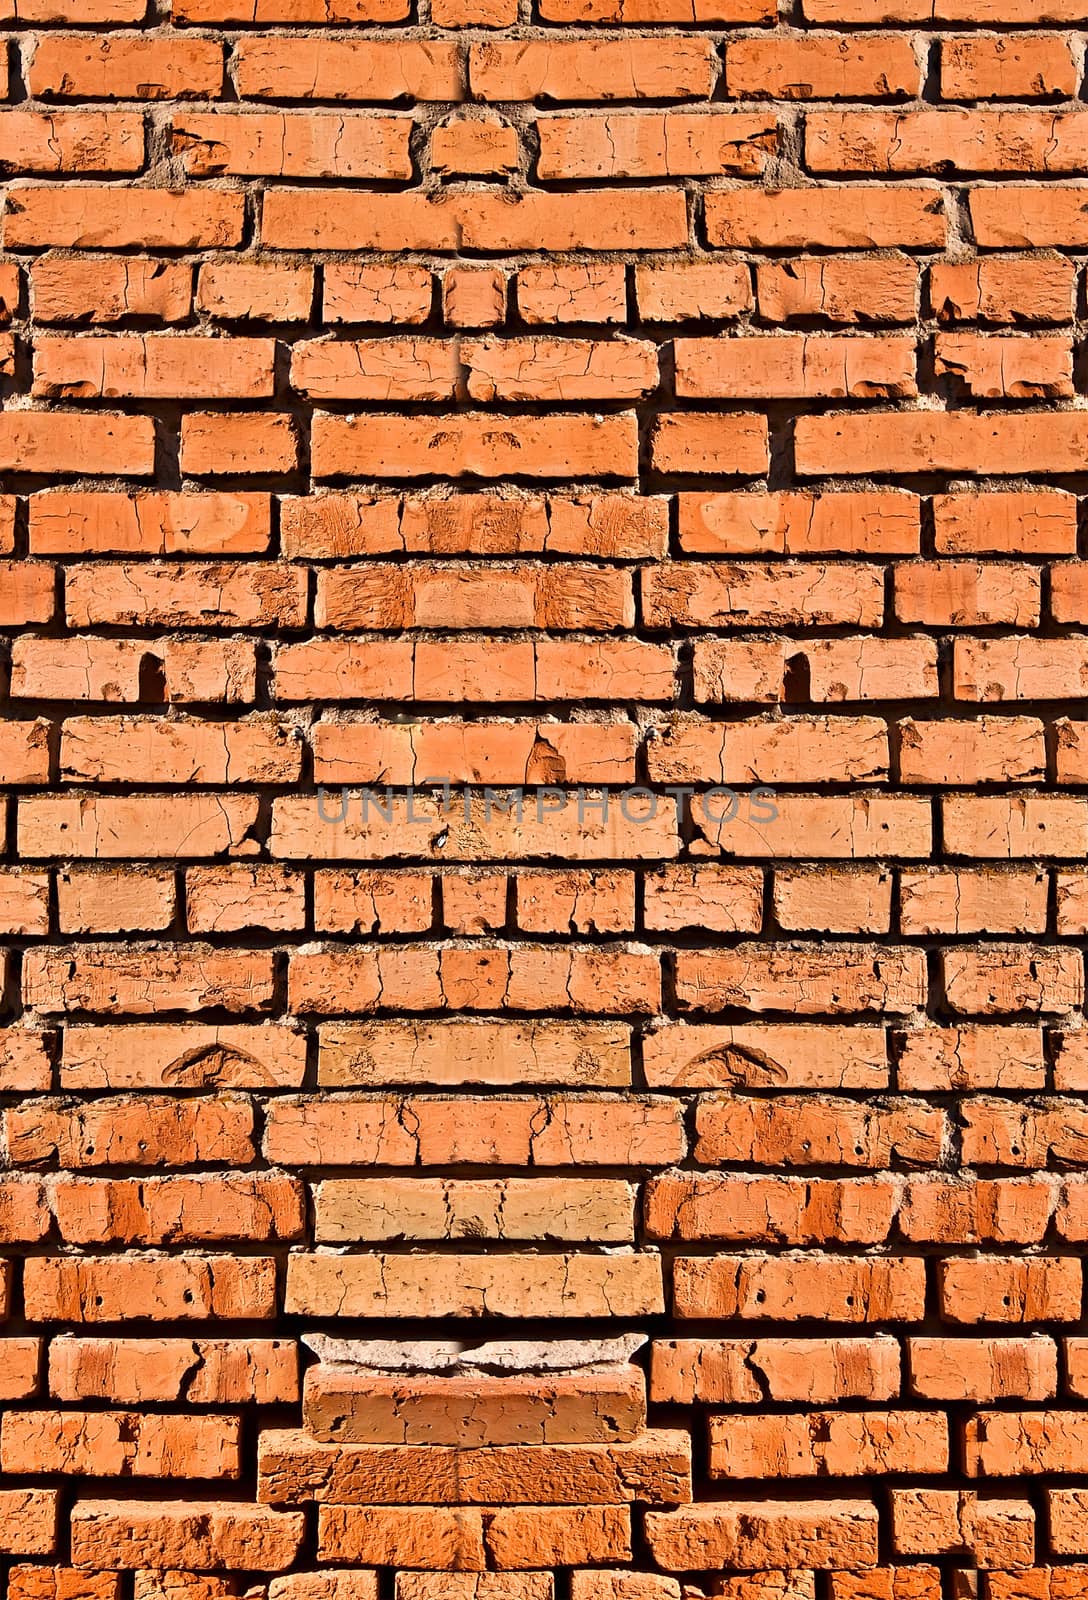 Red brick wall by ozaiachin